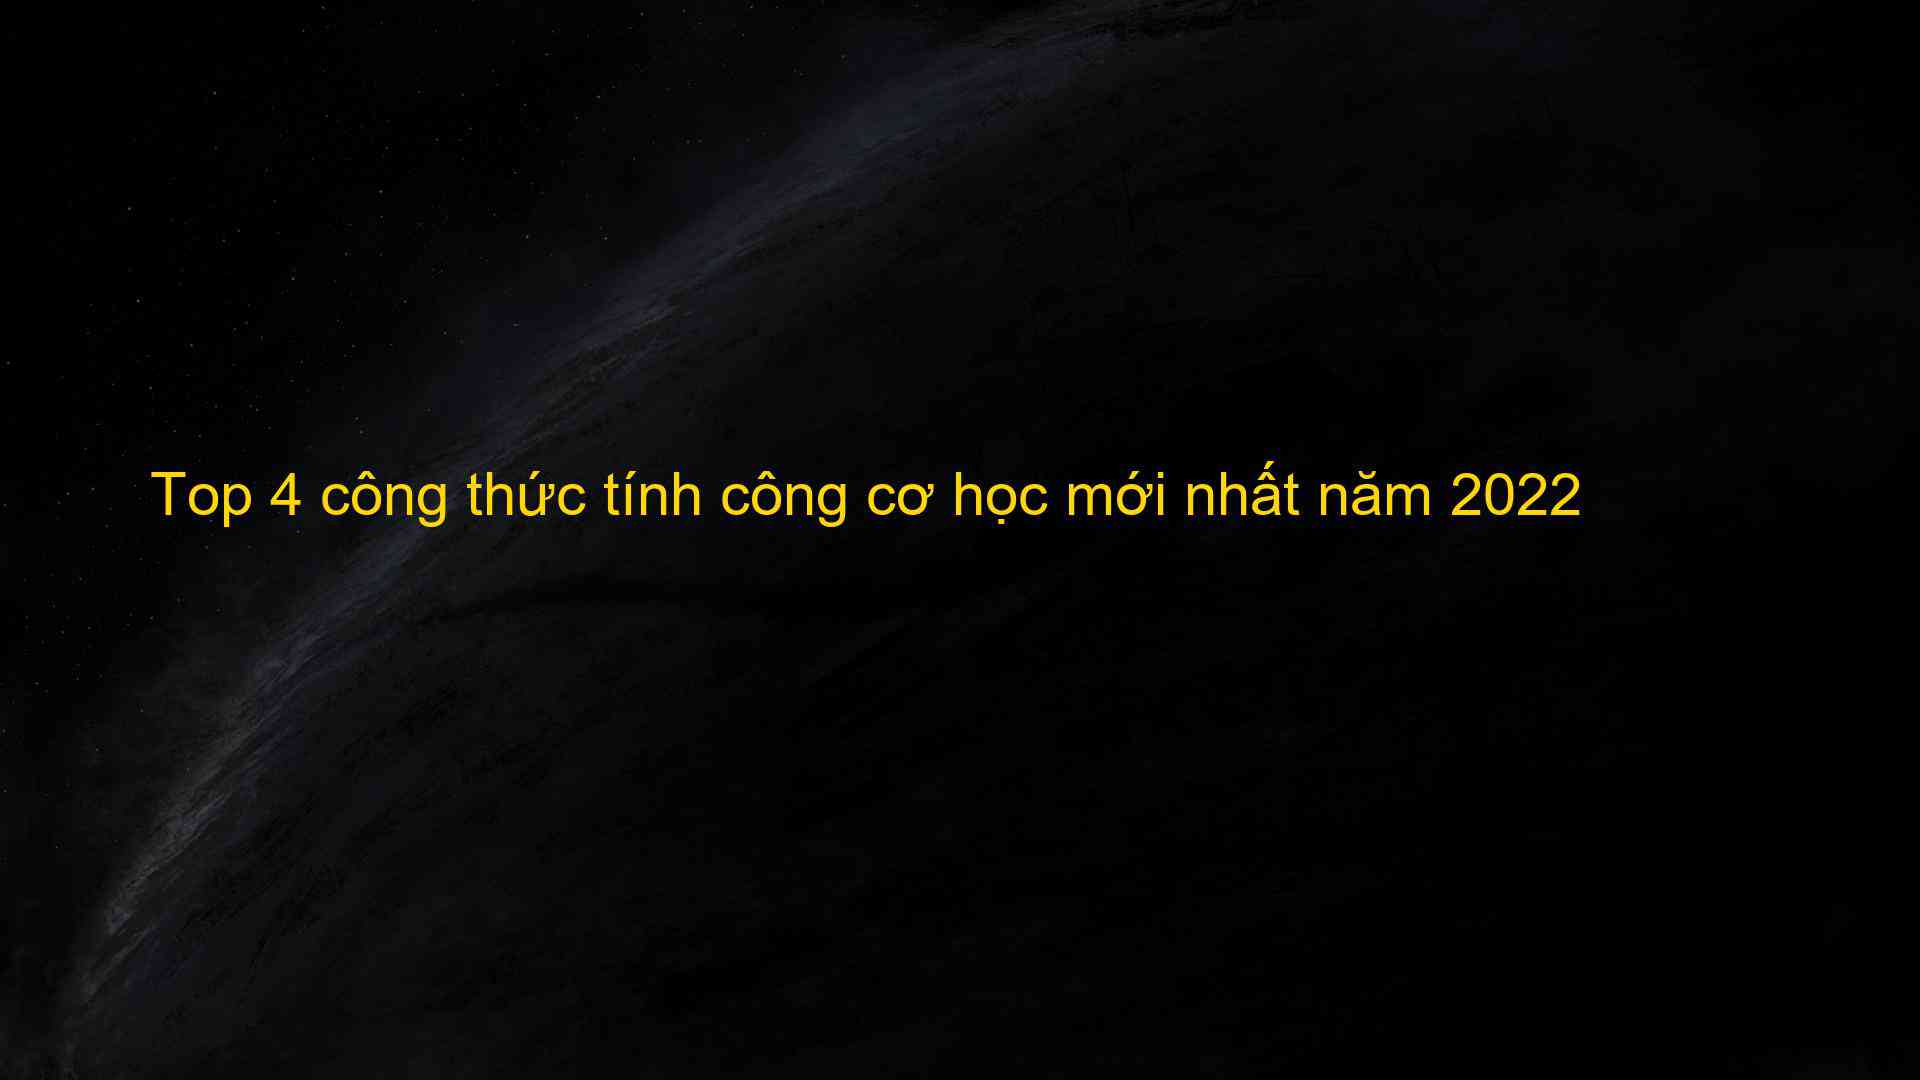 Top 4 cong thuc tinh cong co hoc moi nhat nam 2022 1659720585